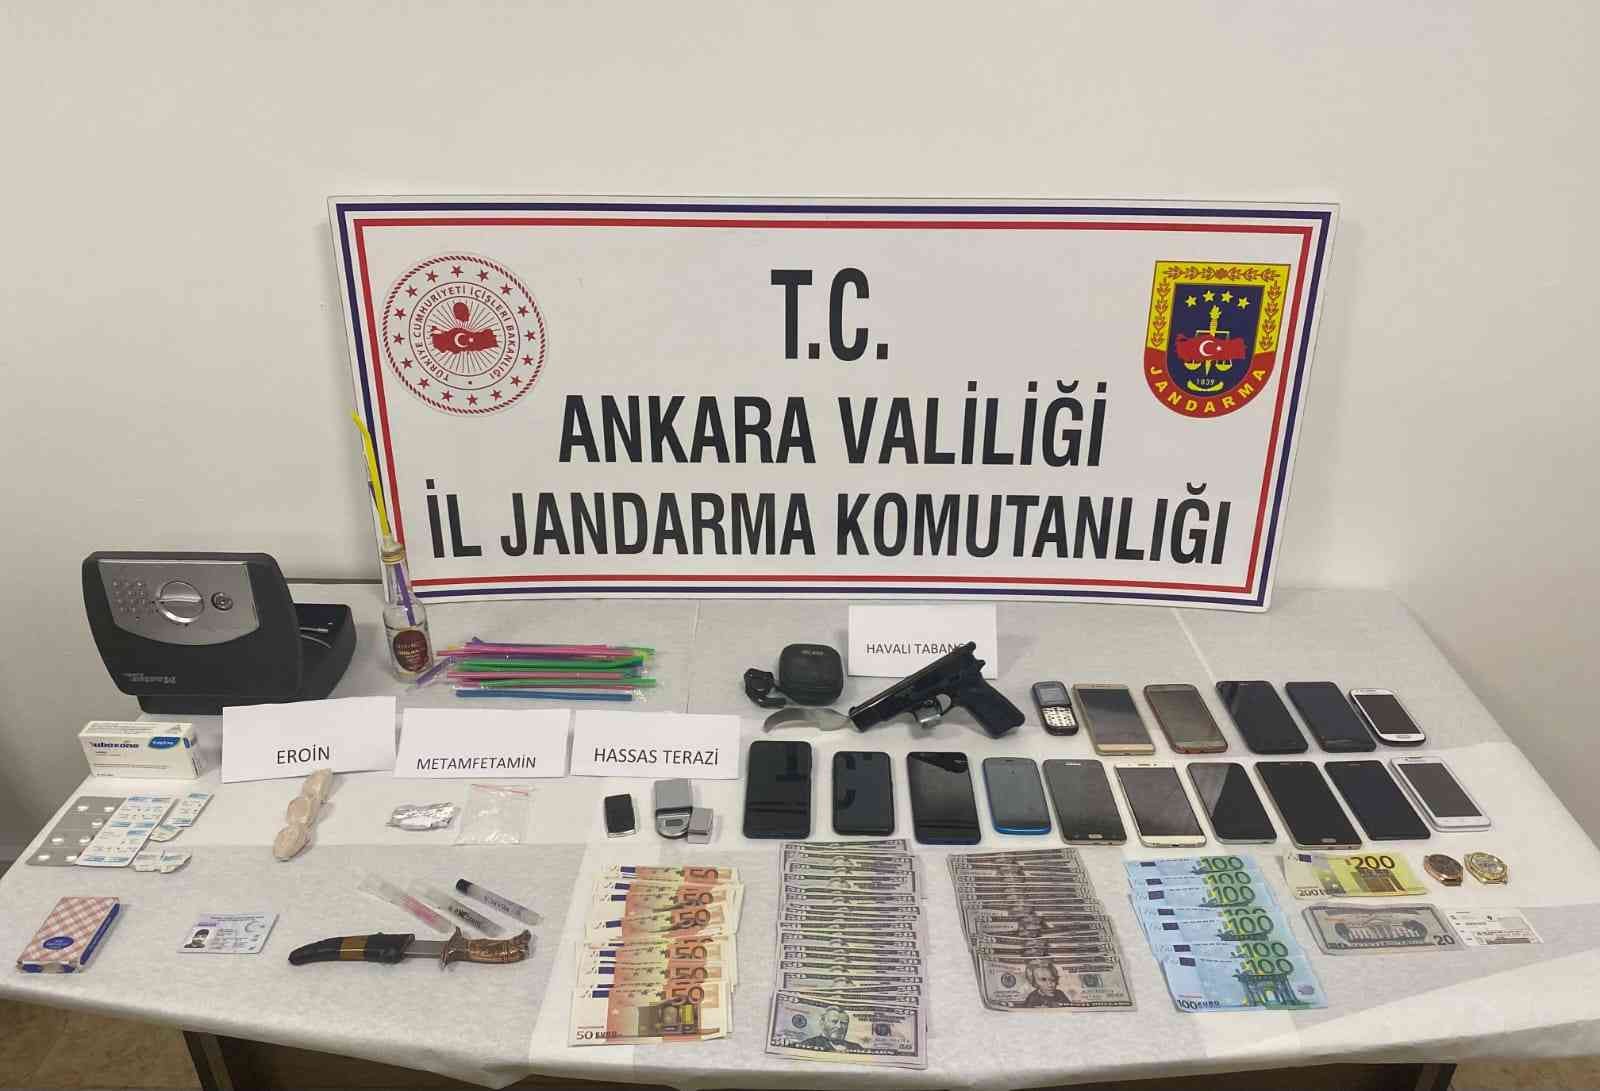 Ankara’da uyuşturucu operasyonu: 6 gözaltı #ankara